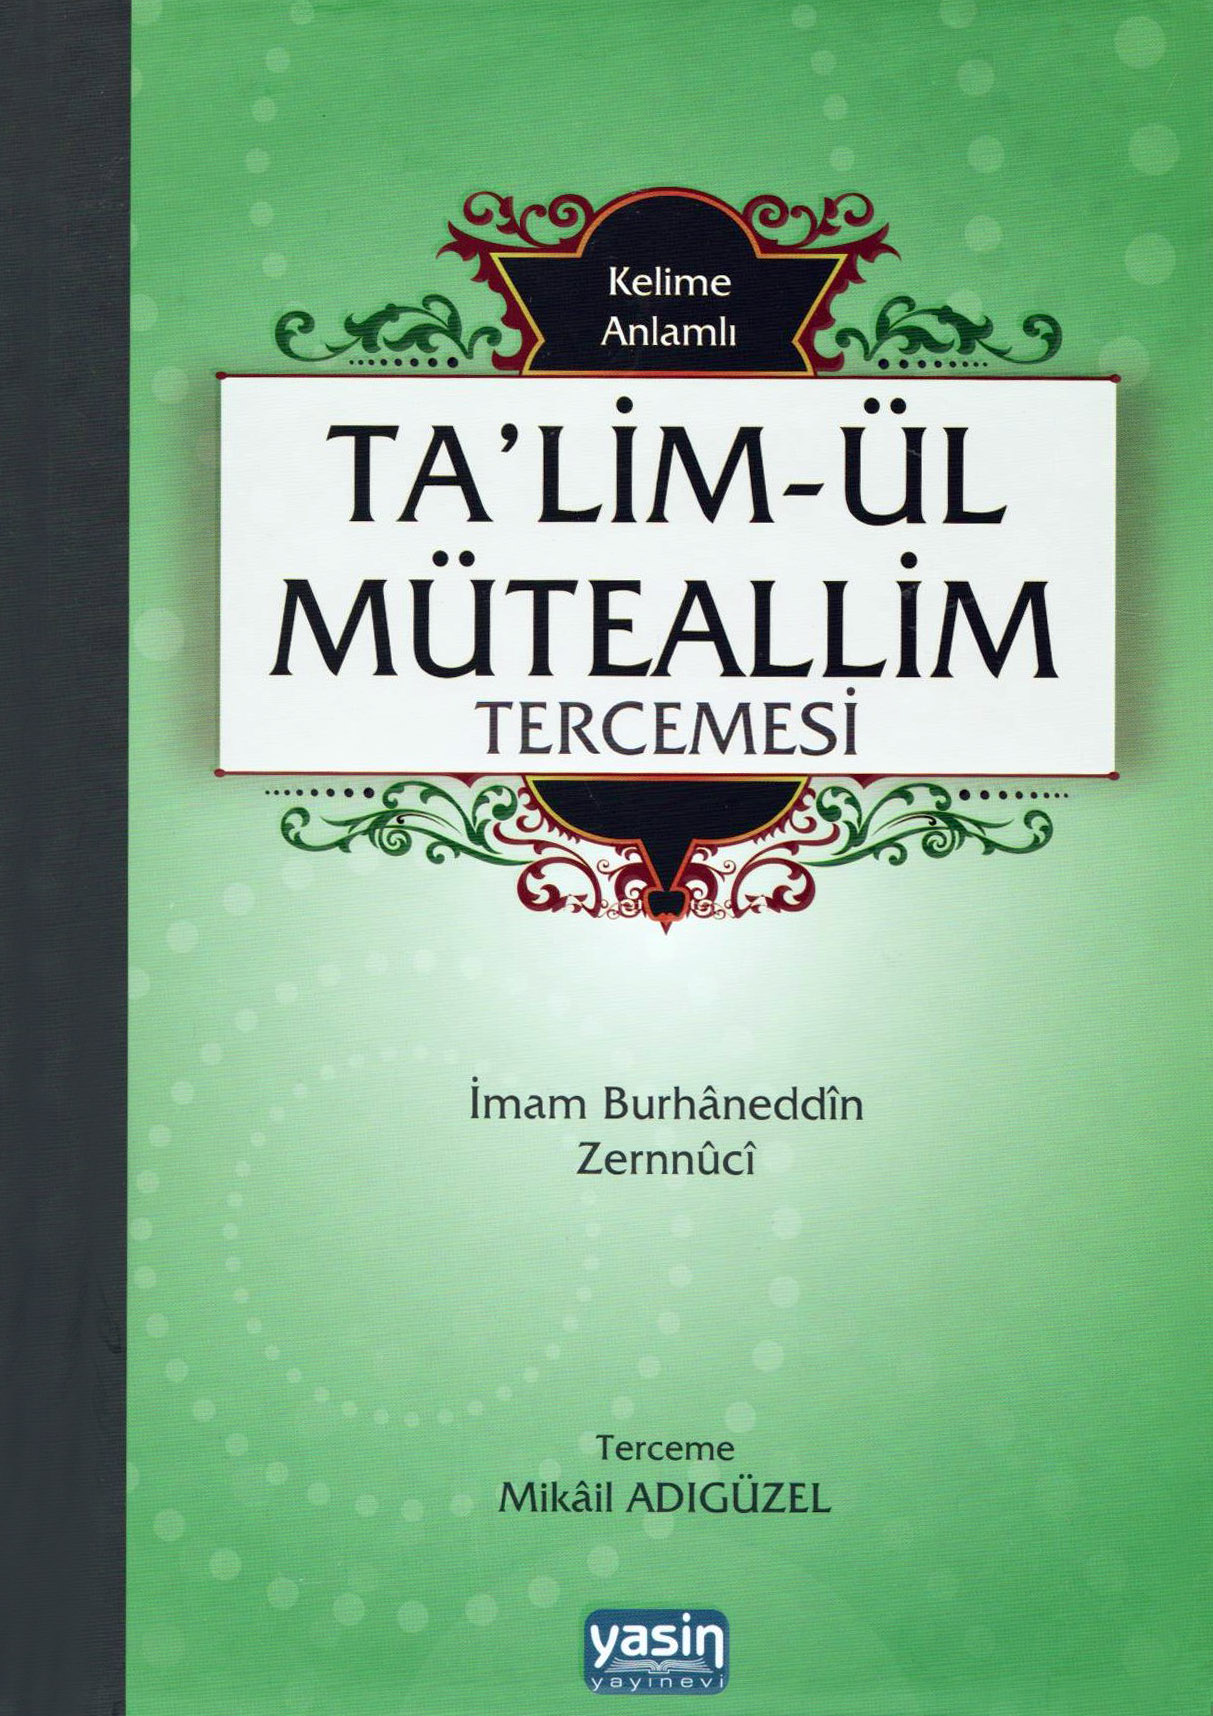 Download Kitab Ta'lim Muta'alim Pdf